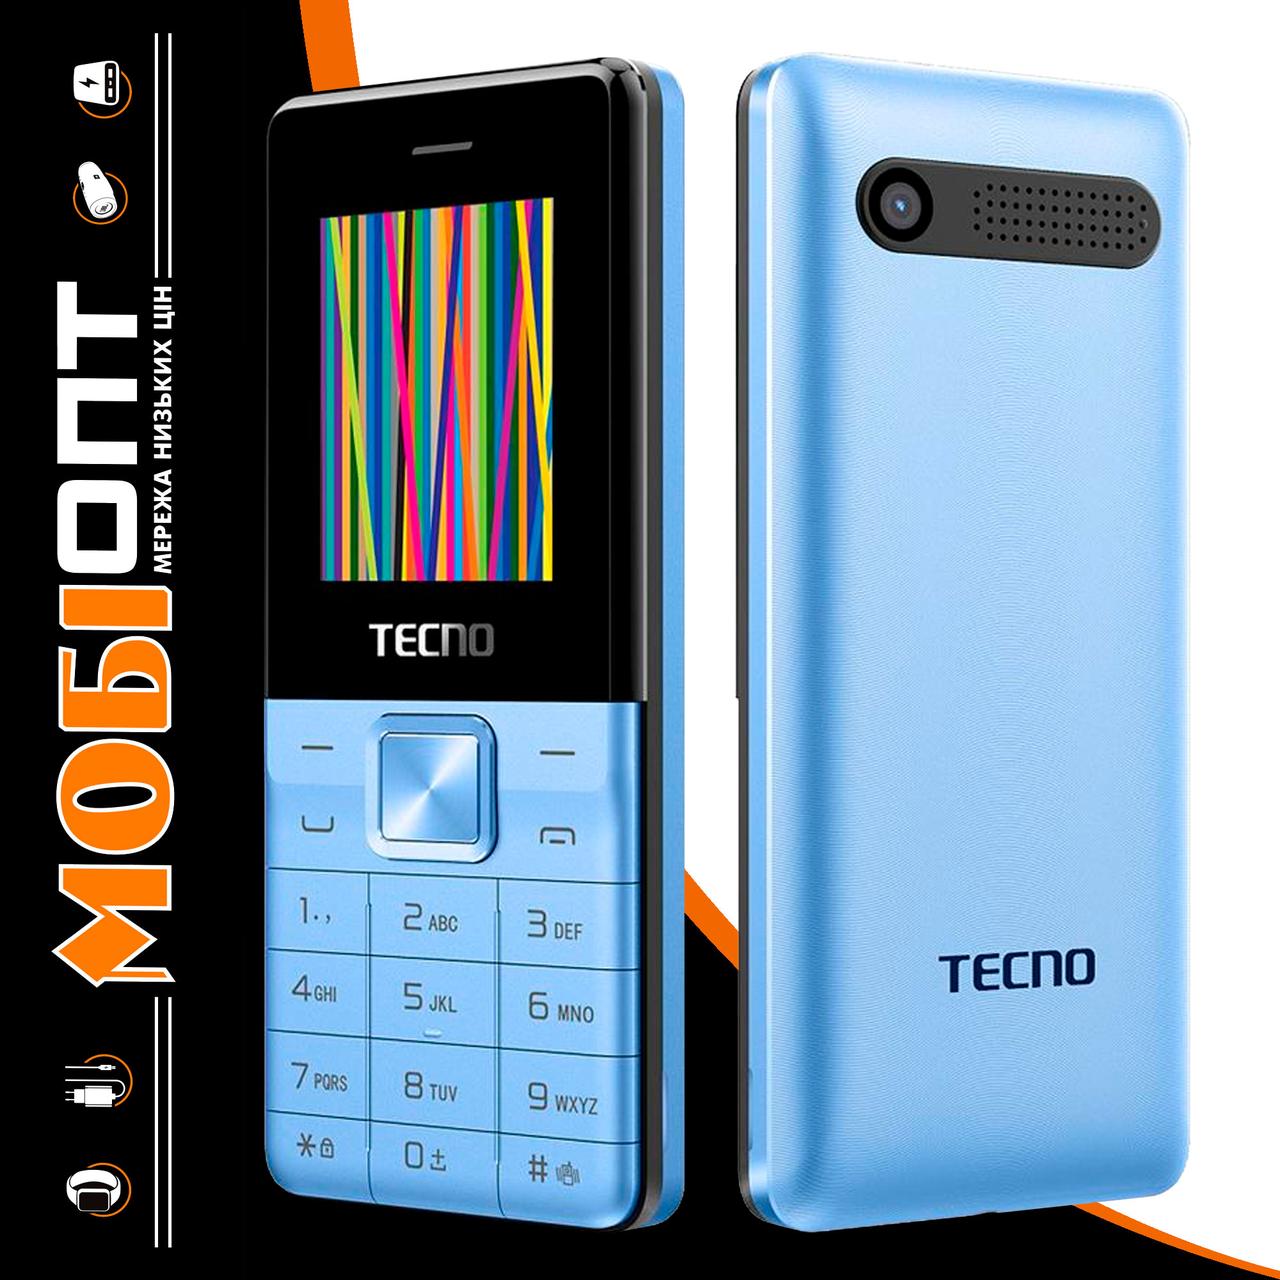 Телефон Tecno T301 Blue